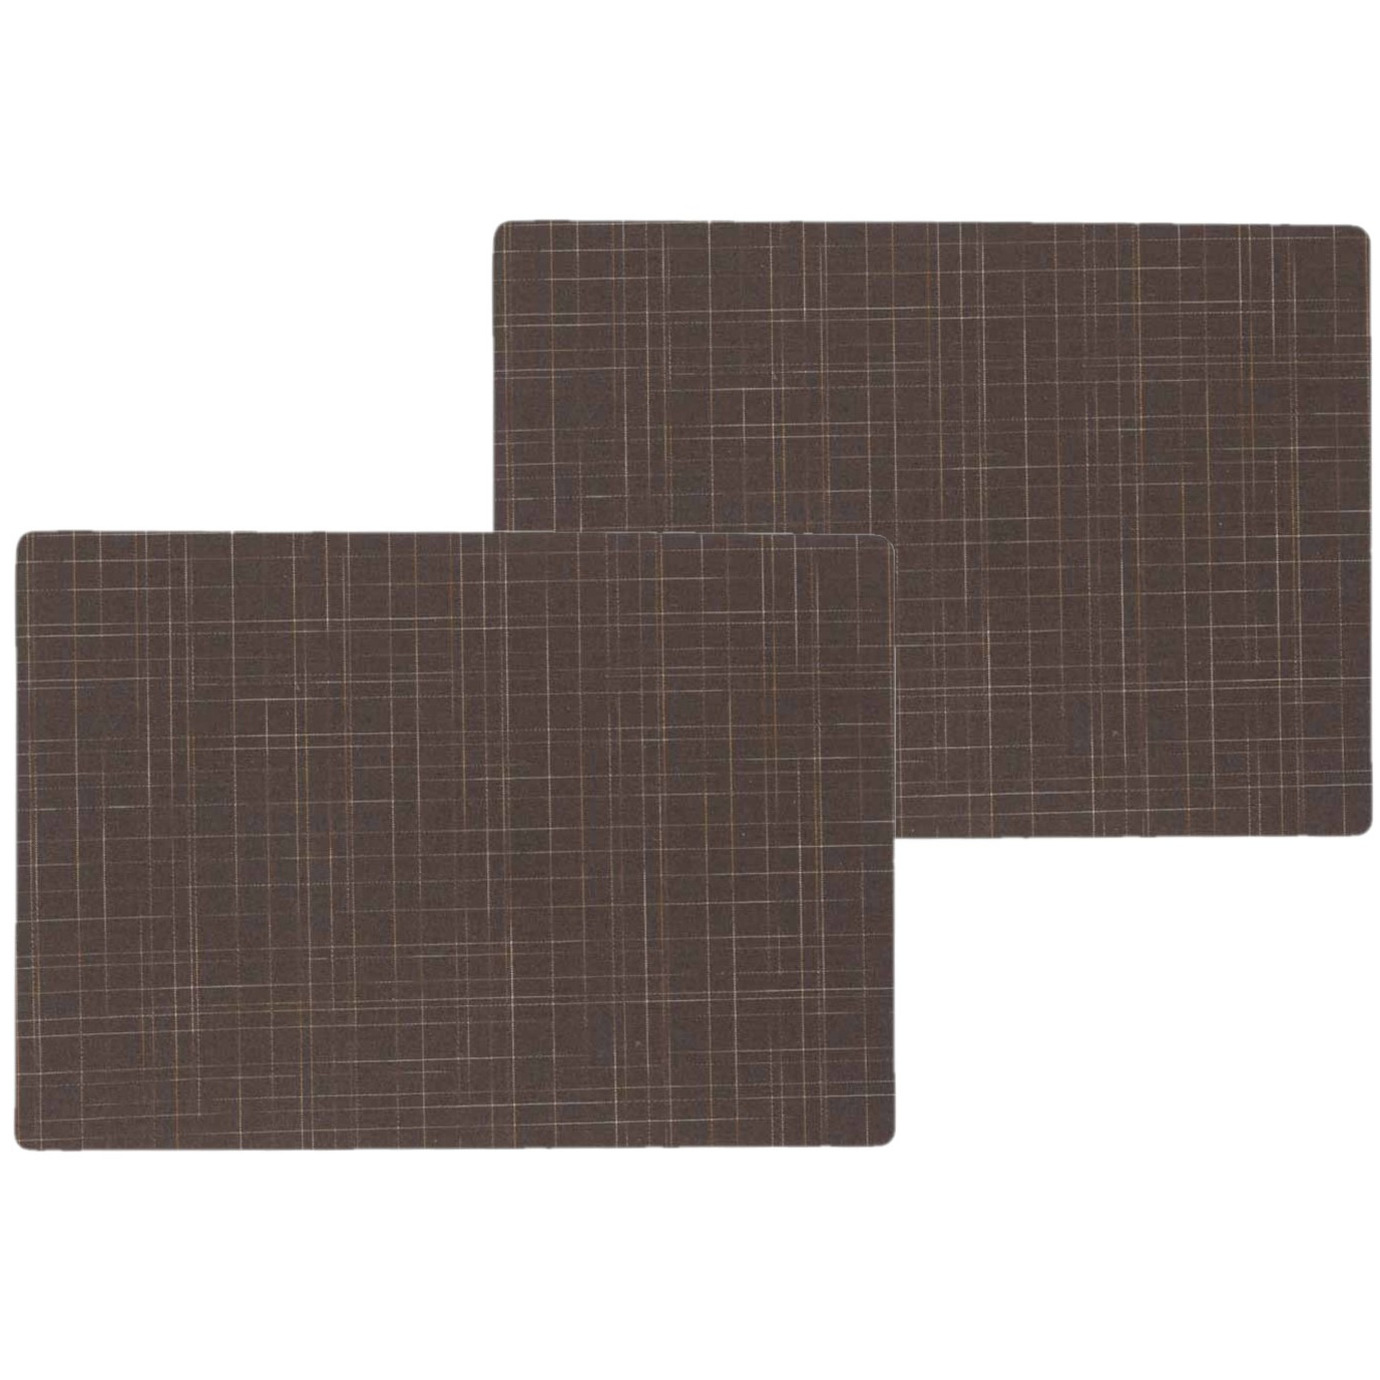 Wicotex 12x stuks stevige luxe Tafel placemats Liso bruin 30 x 43 cm -